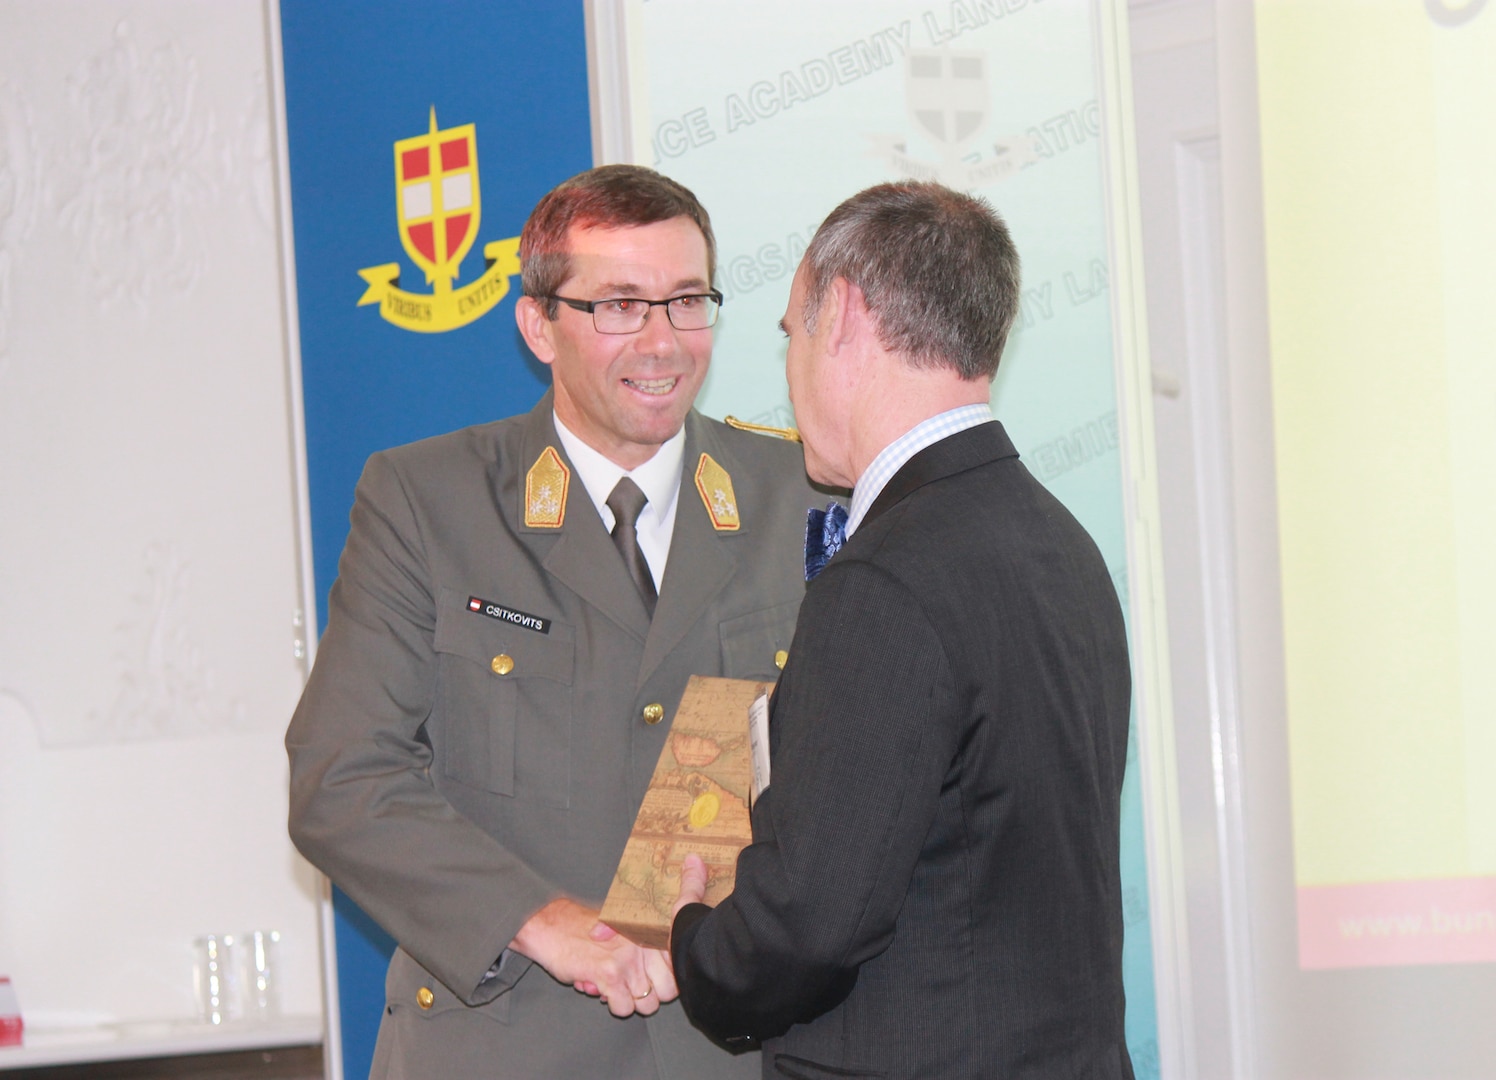 NDU Provost, Dr. John Yaeger, presents a gift to LtGen Erich Csitkovits, Commandant of the Austrian National Defence Academy.
